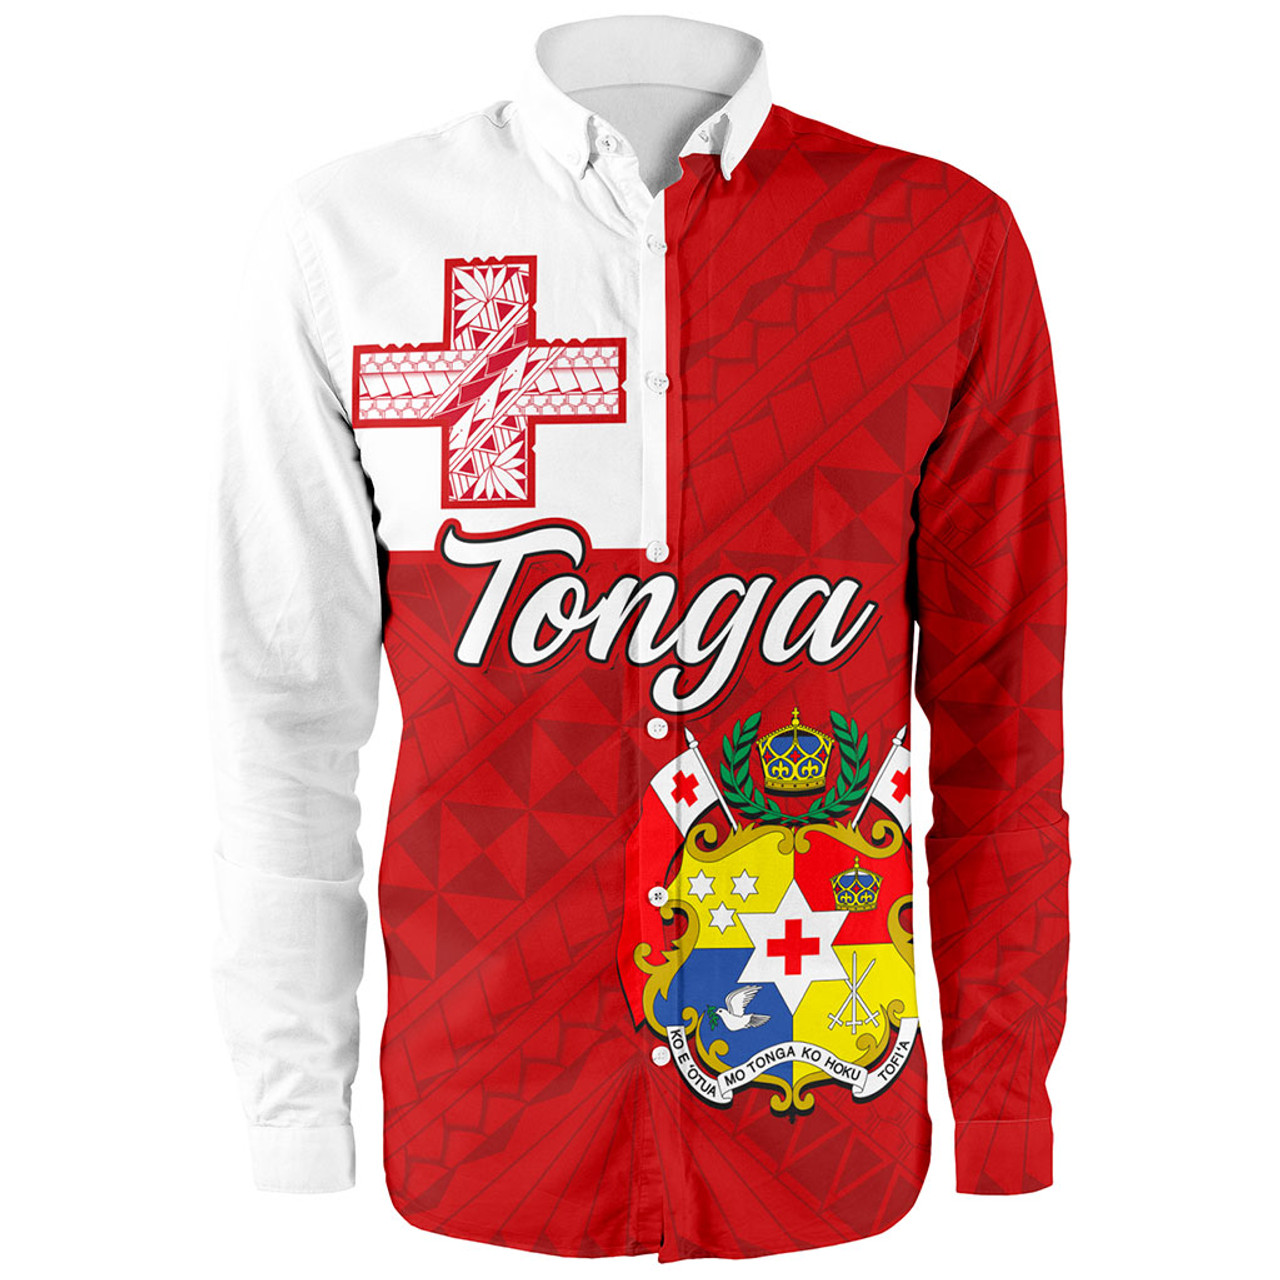 Tonga Long Sleeve Shirt Flag Design With Pattern